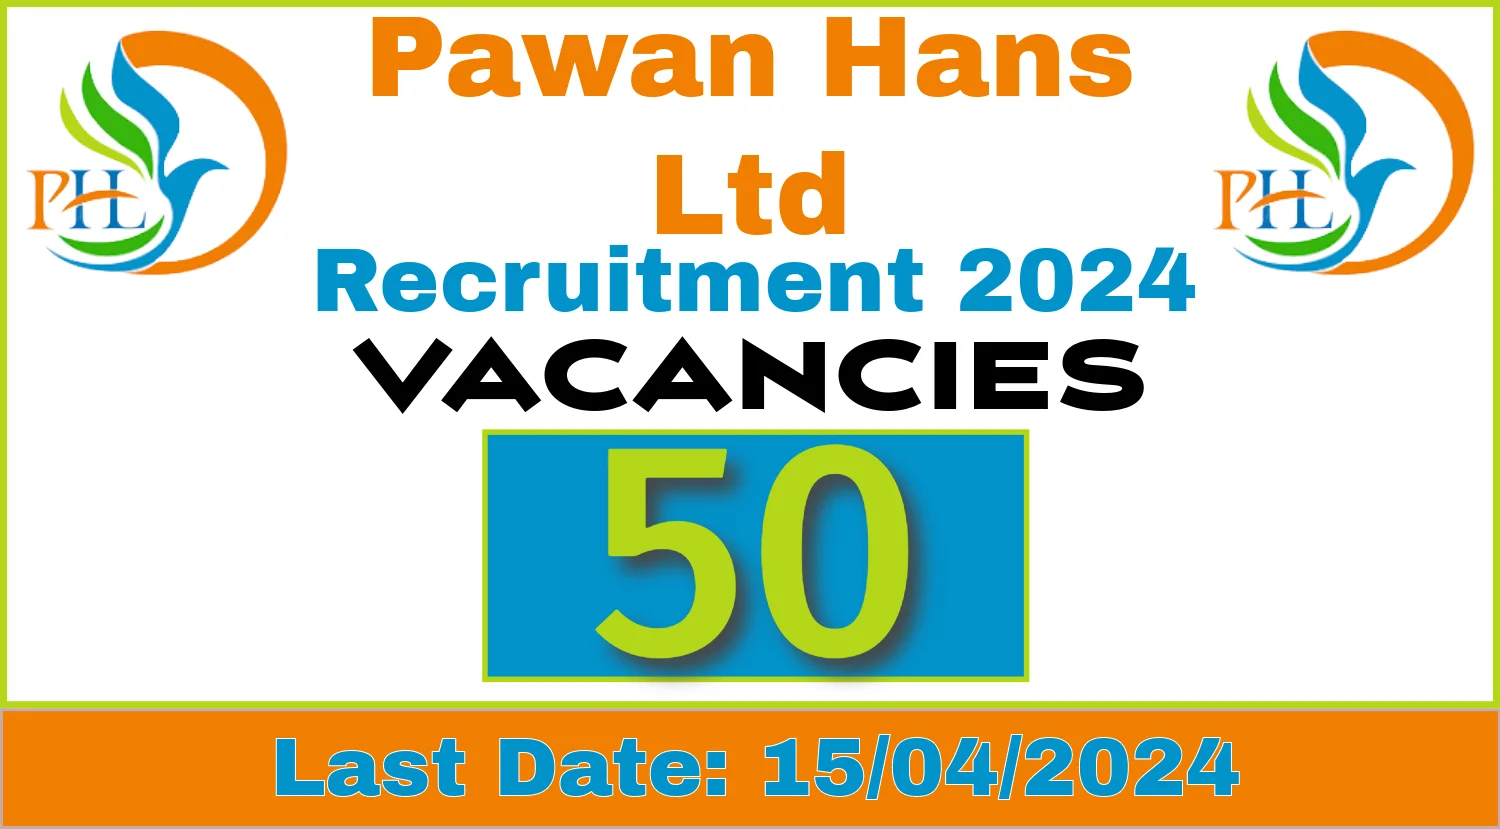 Pawan Hans Ltd Recruitment 2024, Notification Out for 50 Associate Helicopter Pilot Posts